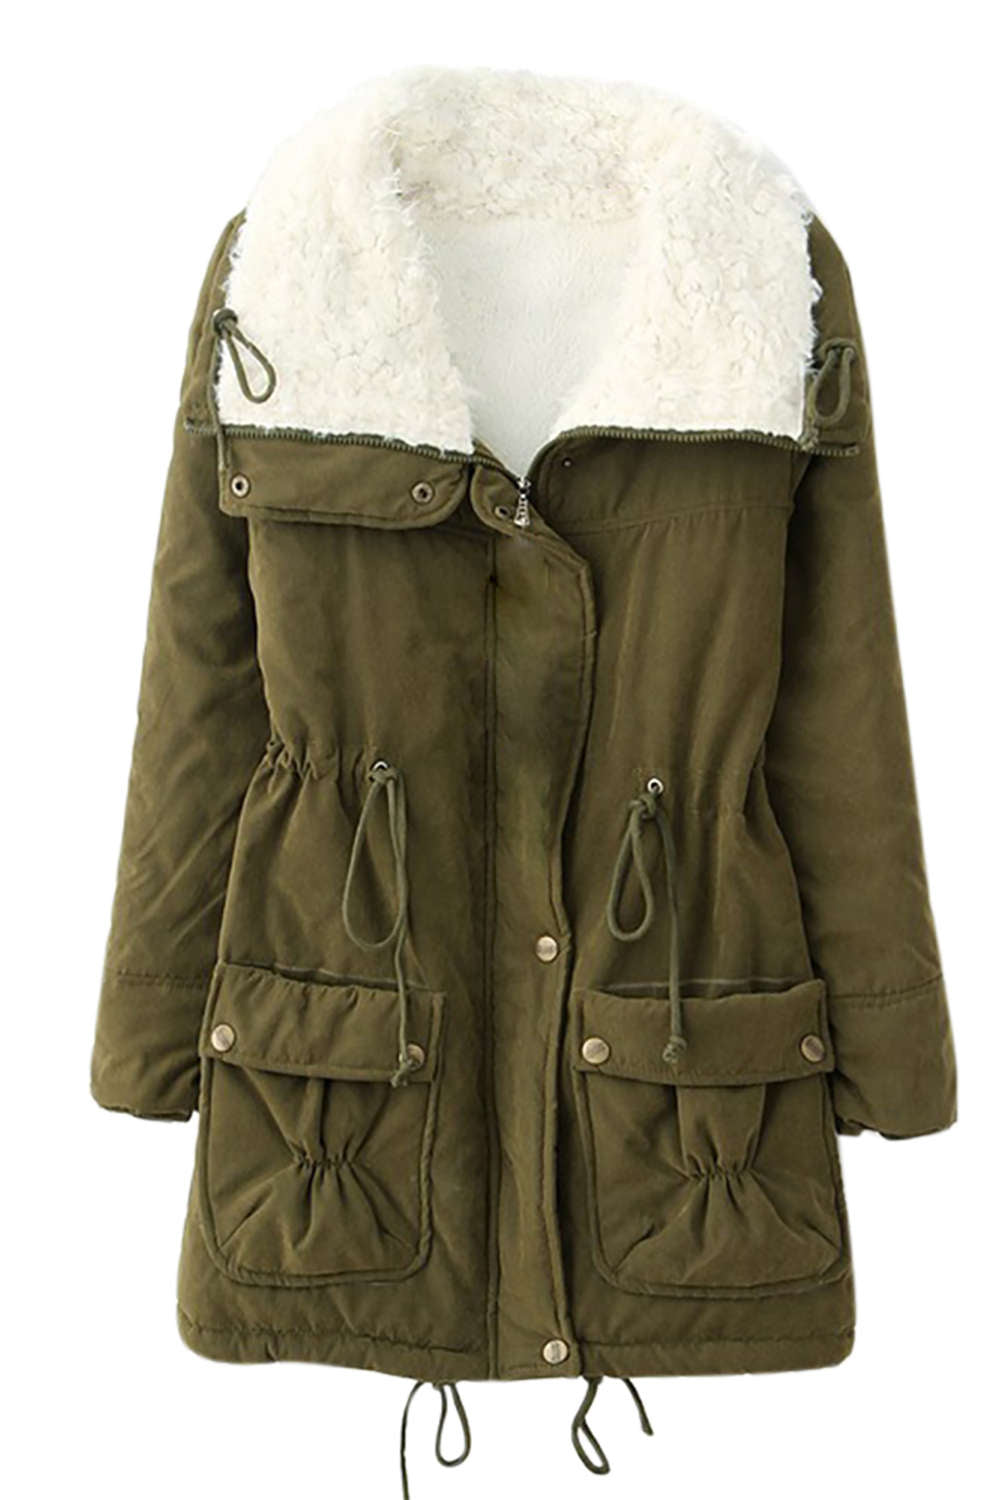 Iyasson Winter Thick Warm Lamb Wool Jacket Coat